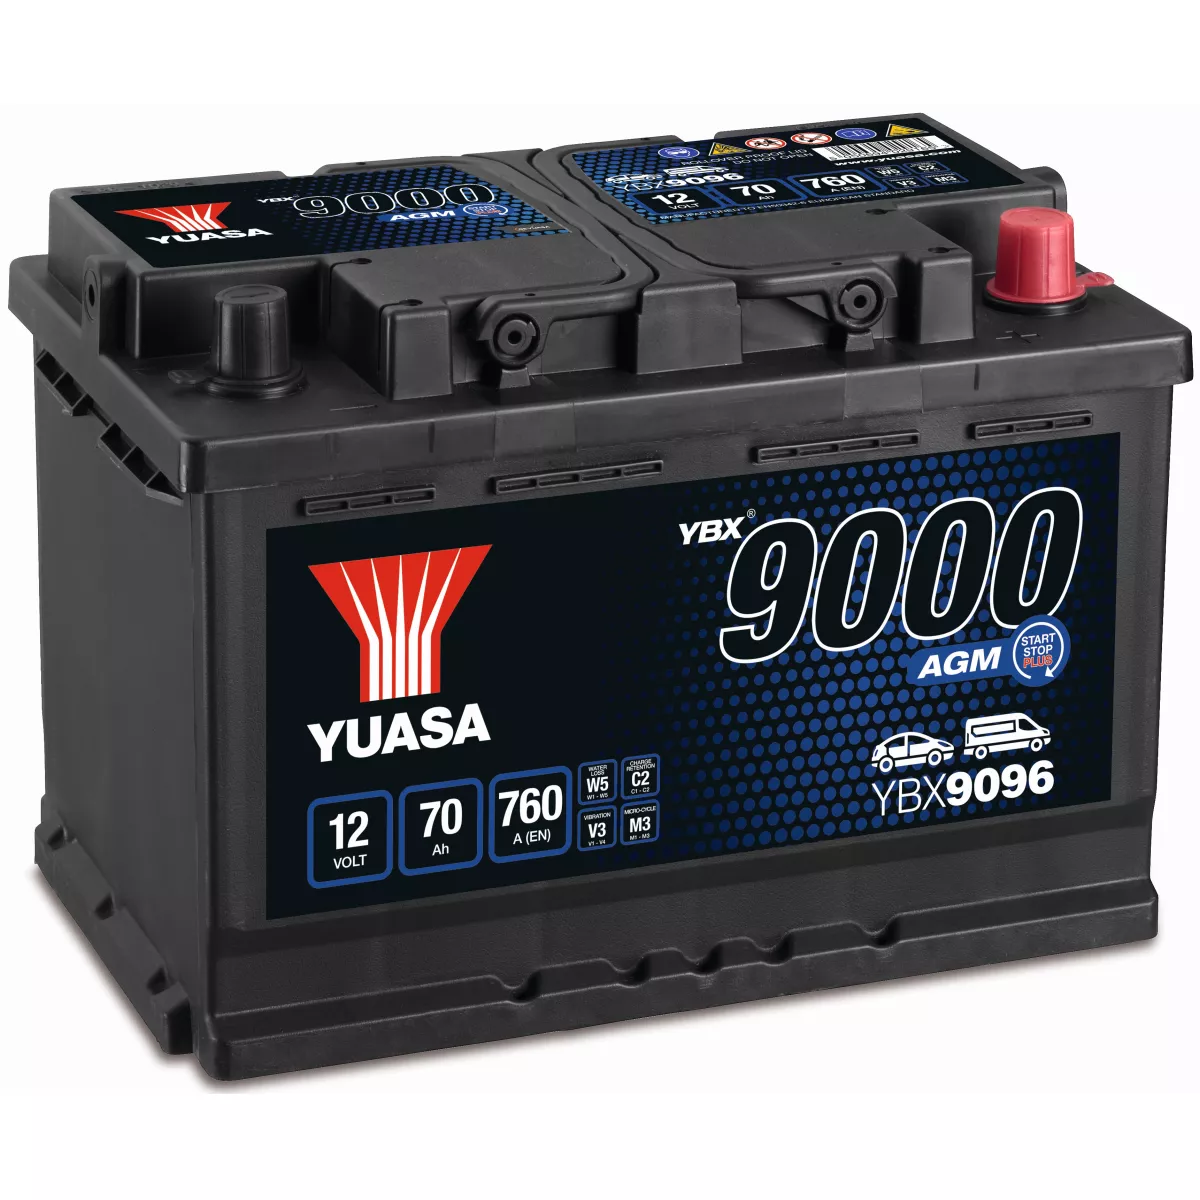 BATTERIE YUASA YBX9096 START STOP AGM 12V 70AH 760A - Batteries Auto,  Voitures, 4x4, Véhicules Start & Stop Auto - BatterySet